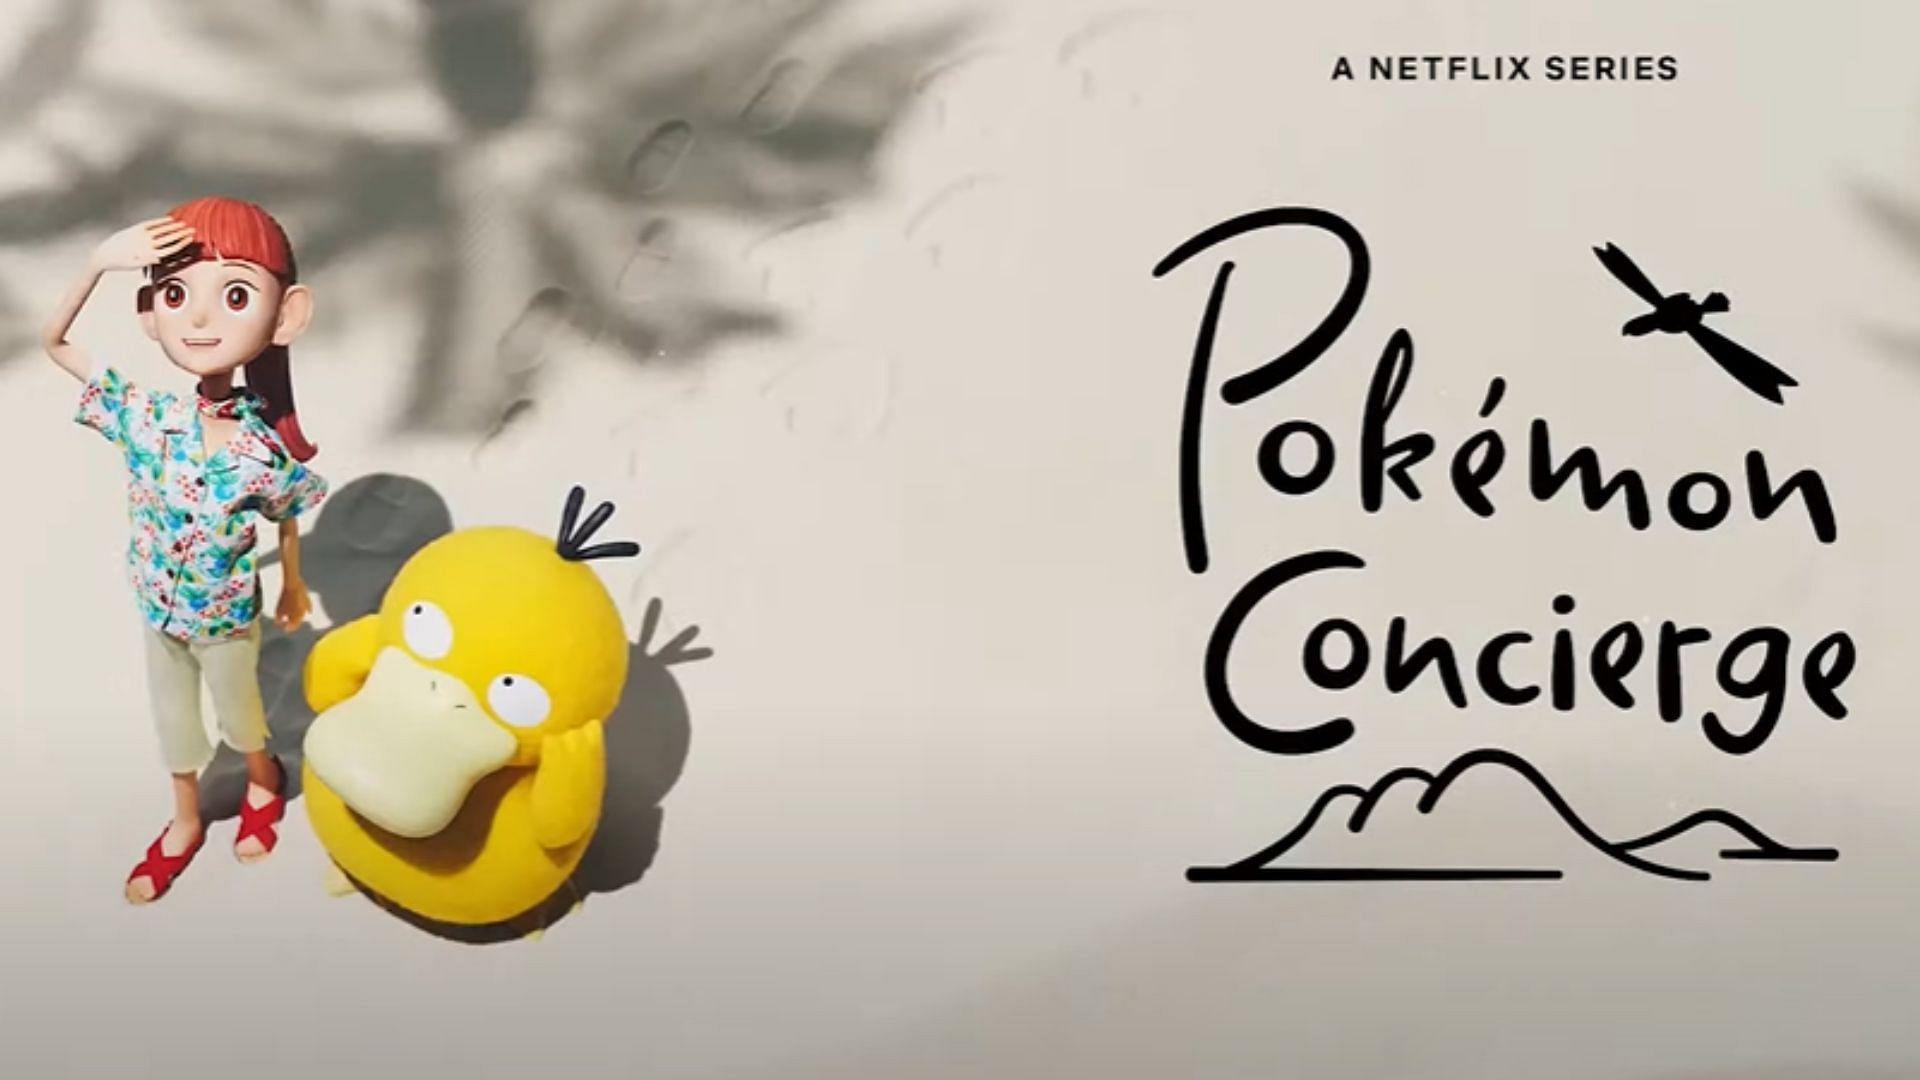 New Pokémon Concierge stop-motion animated show announced for Netflix